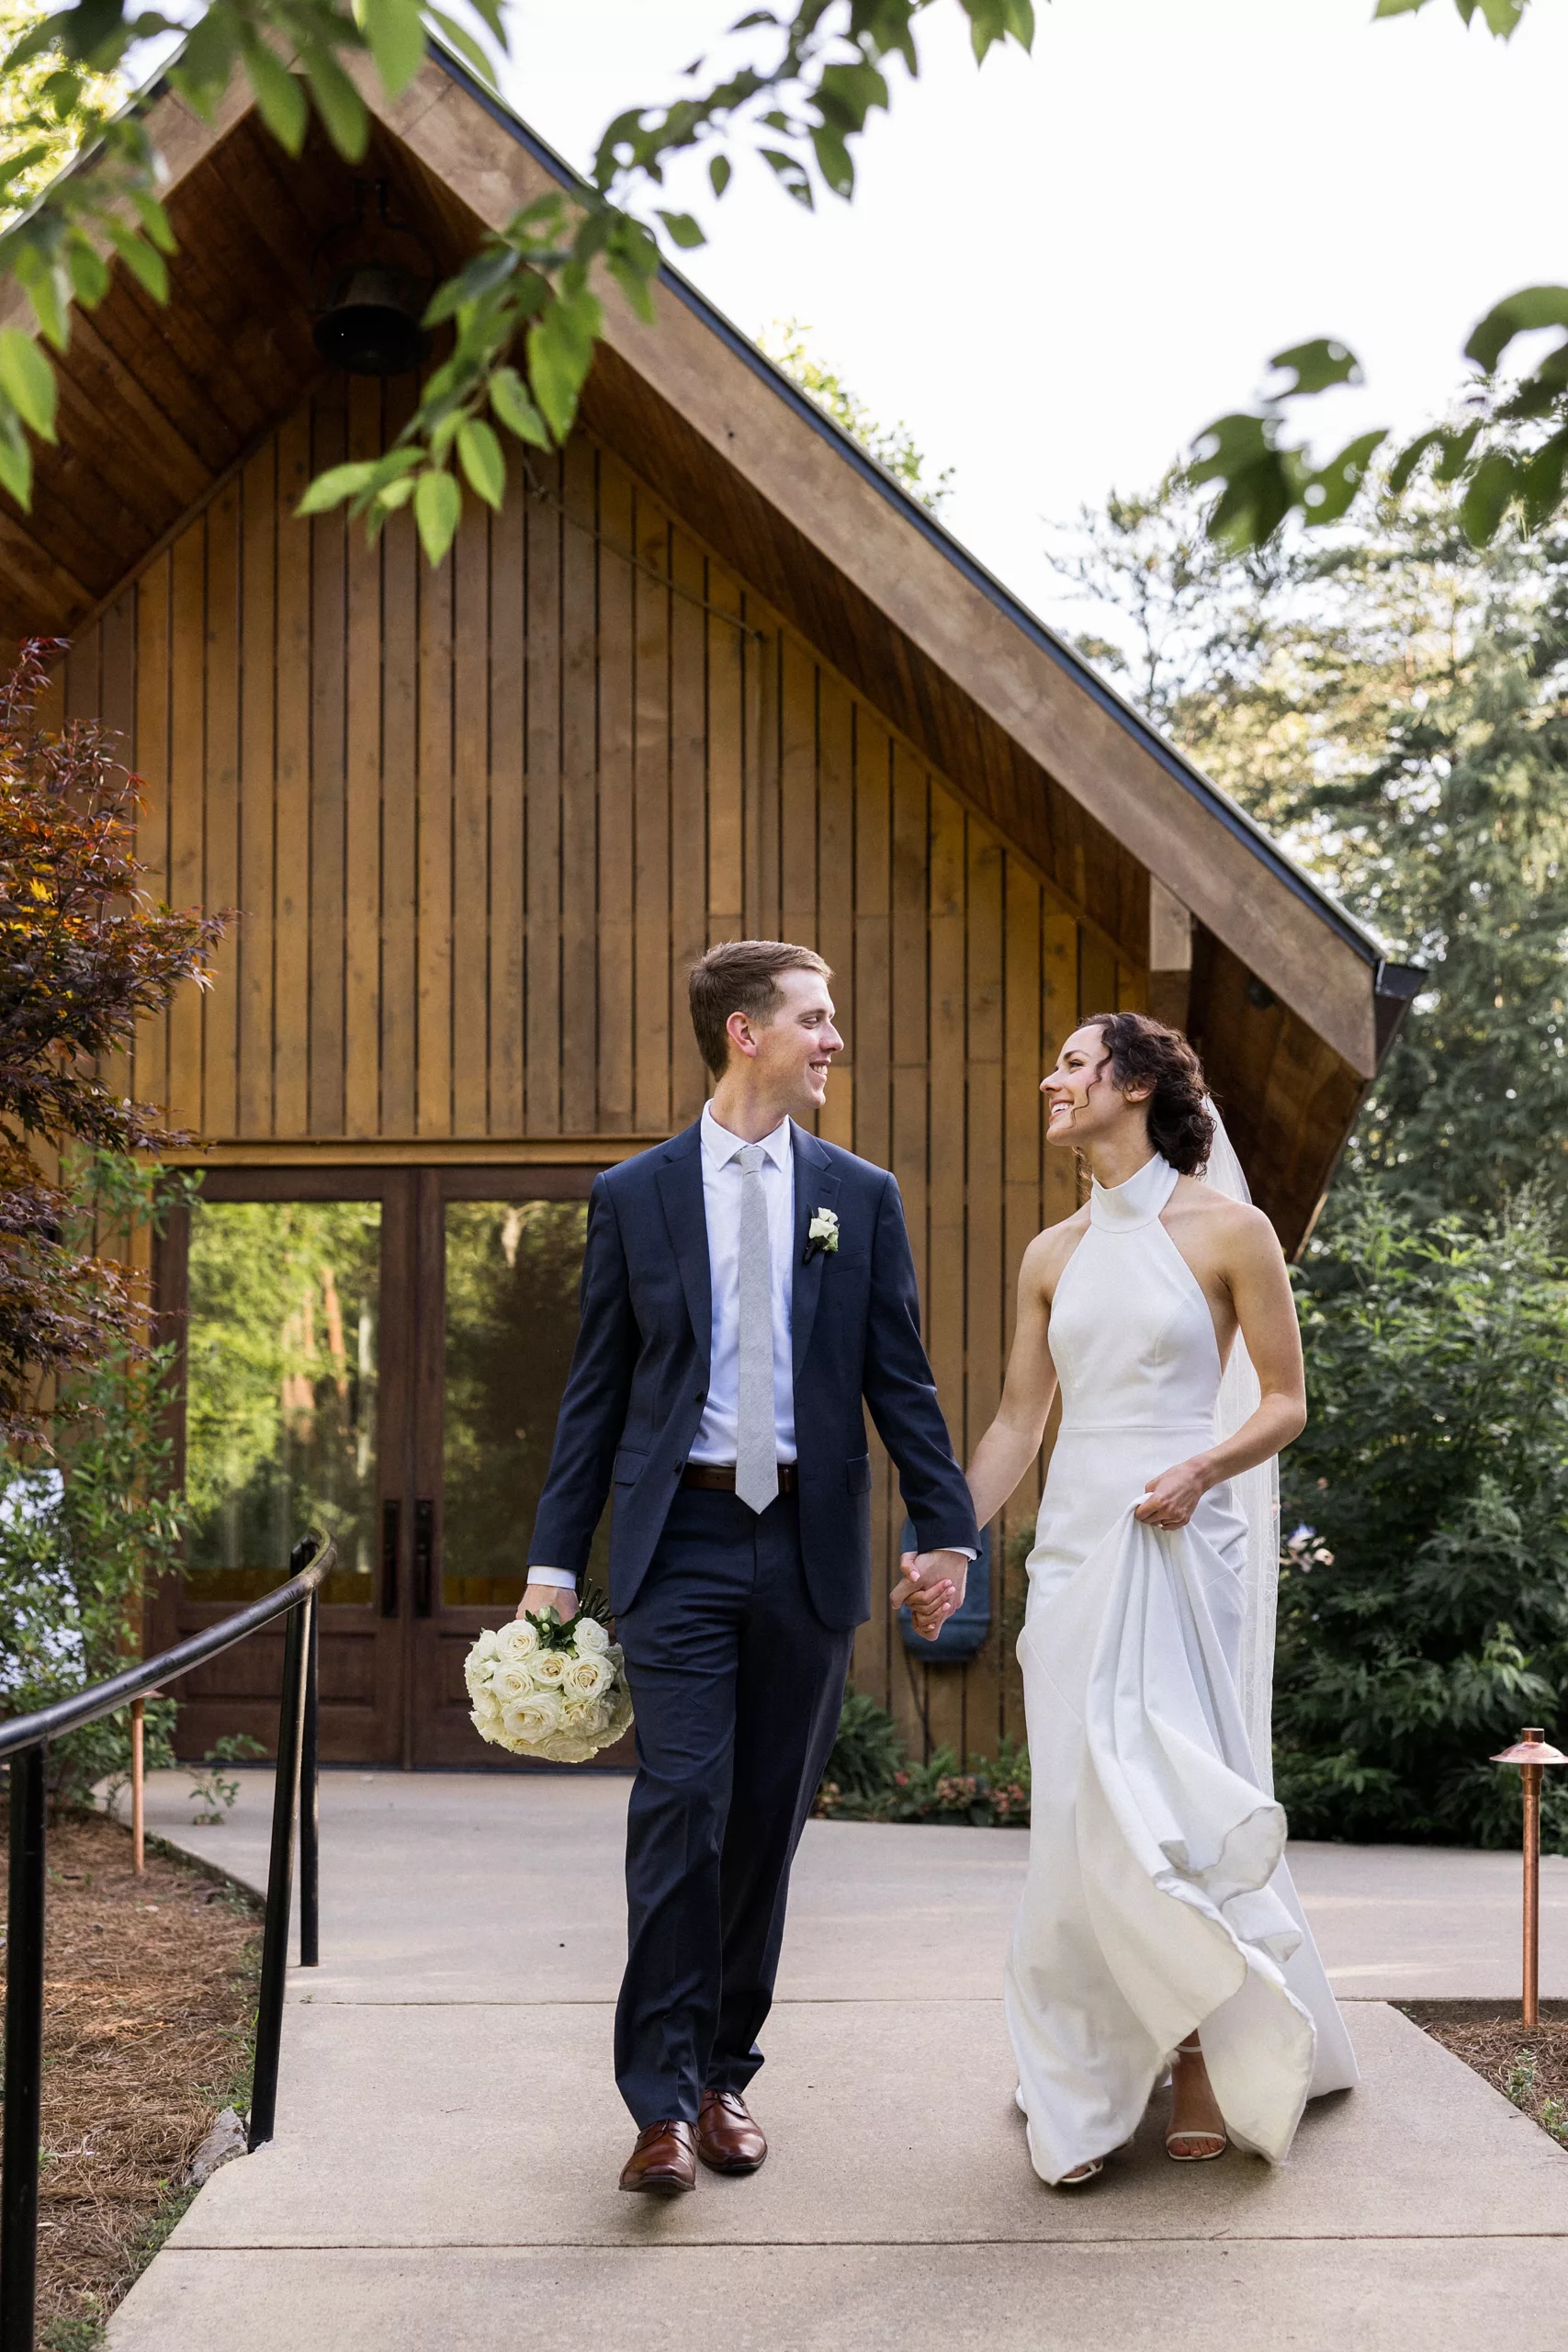 Newlyweds walk down a garden sidewalk holding hands in front of a cabin at a Juliette Chapel Wedding